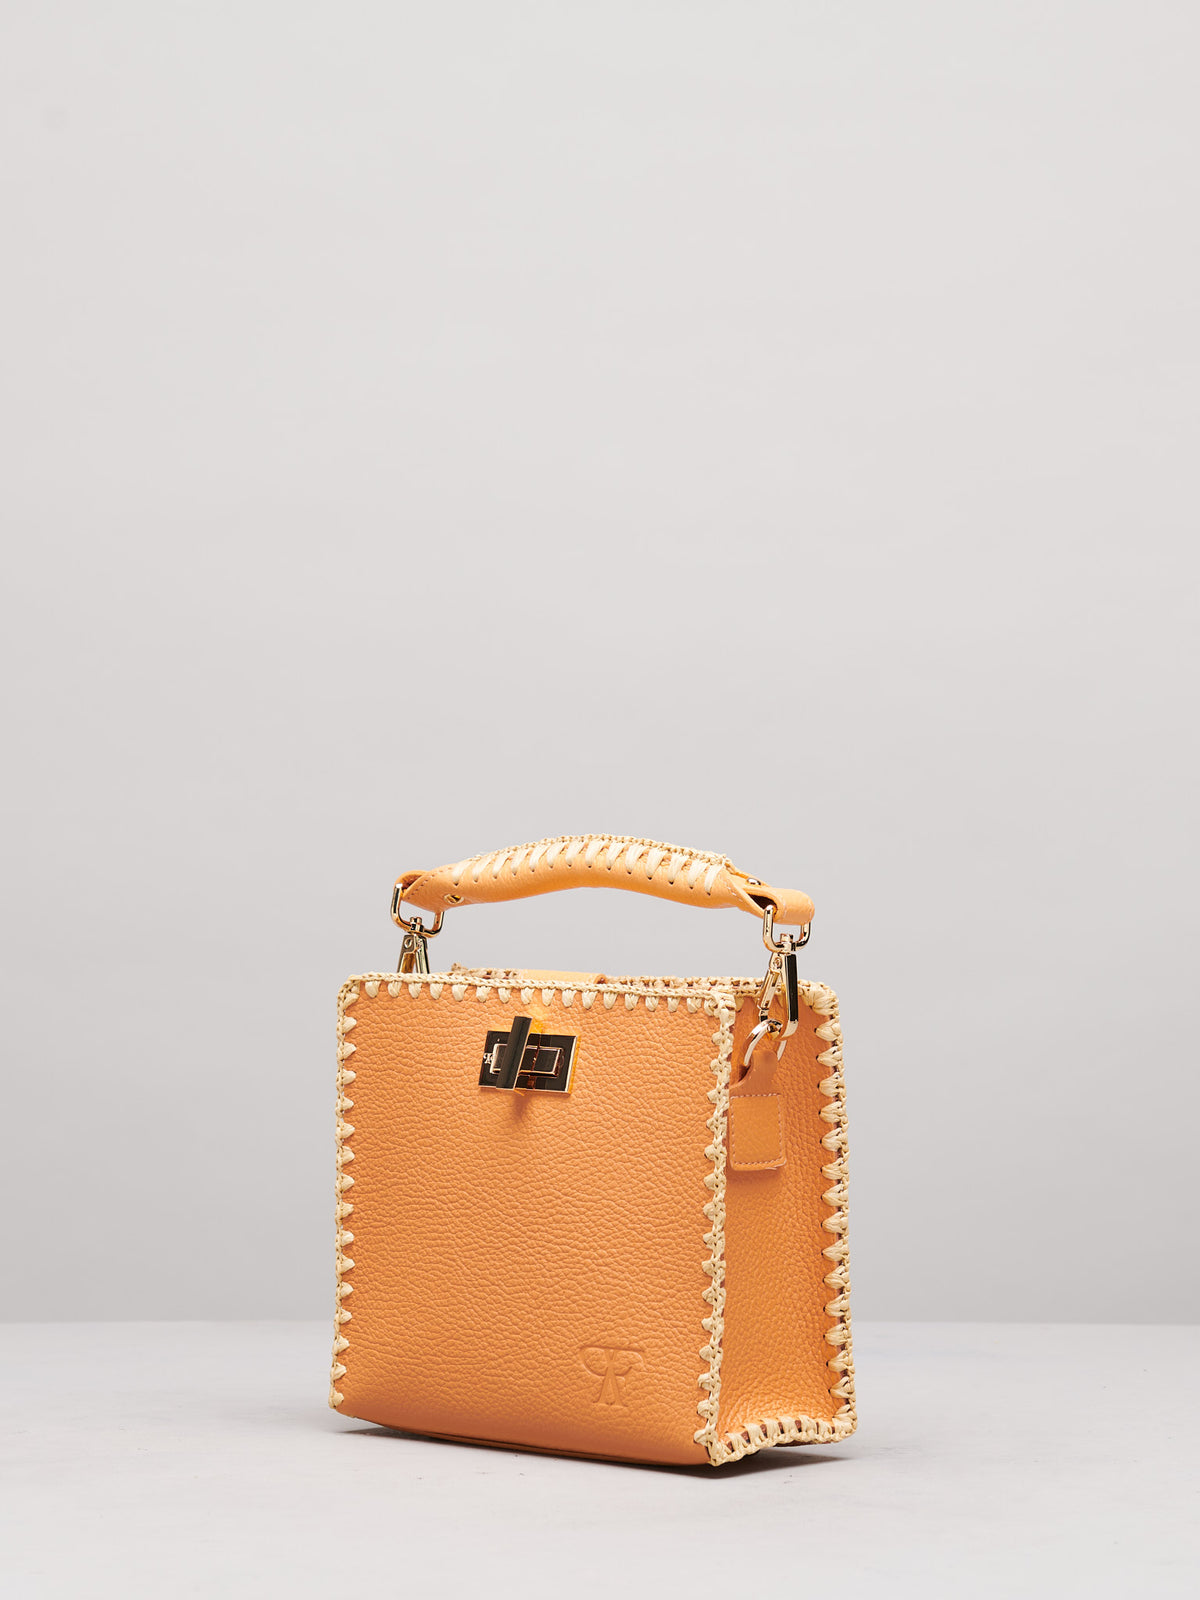 Sylvia Small Handbag in Soft Orange